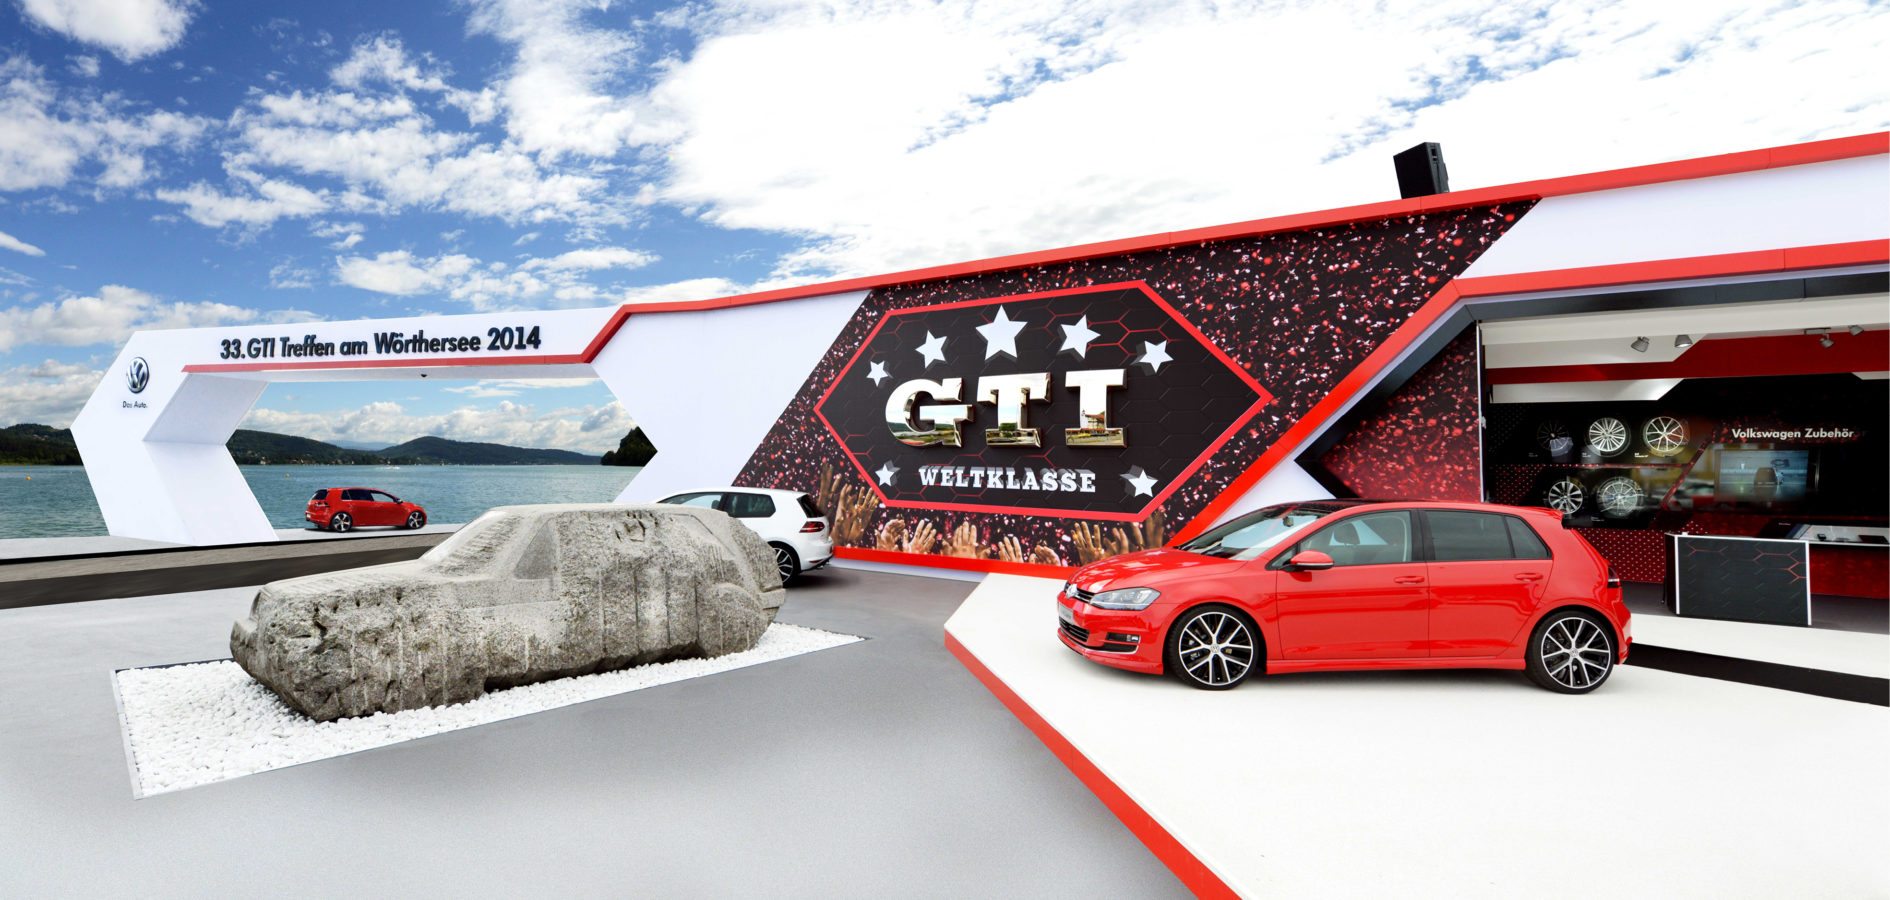 Volkswagen GTI Treffen 2014